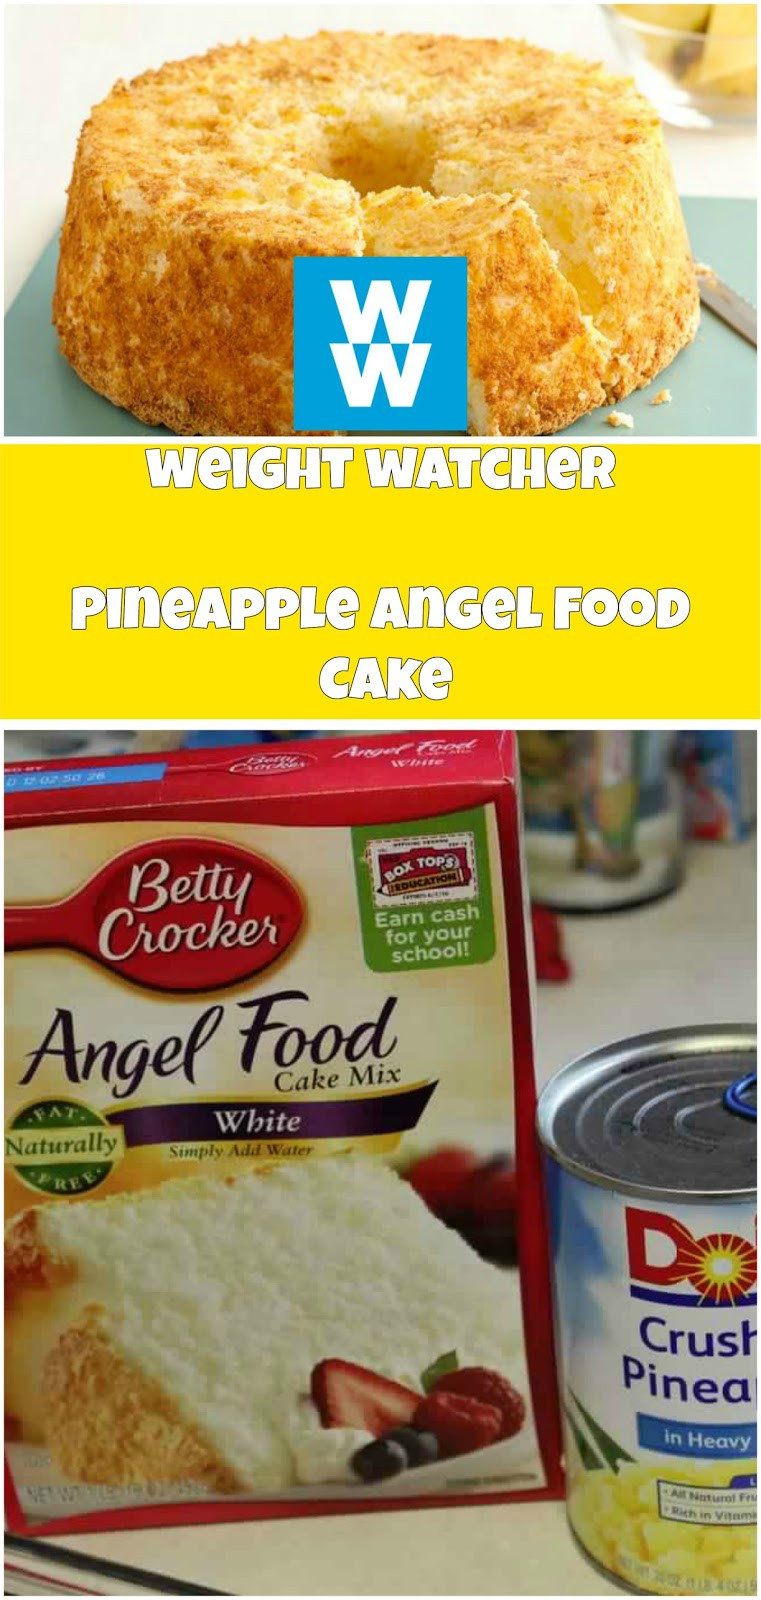 Weight Watcher Pineapple Angel Food Cake
 weight watchers recipes Pineapple Angel Food Cake 5